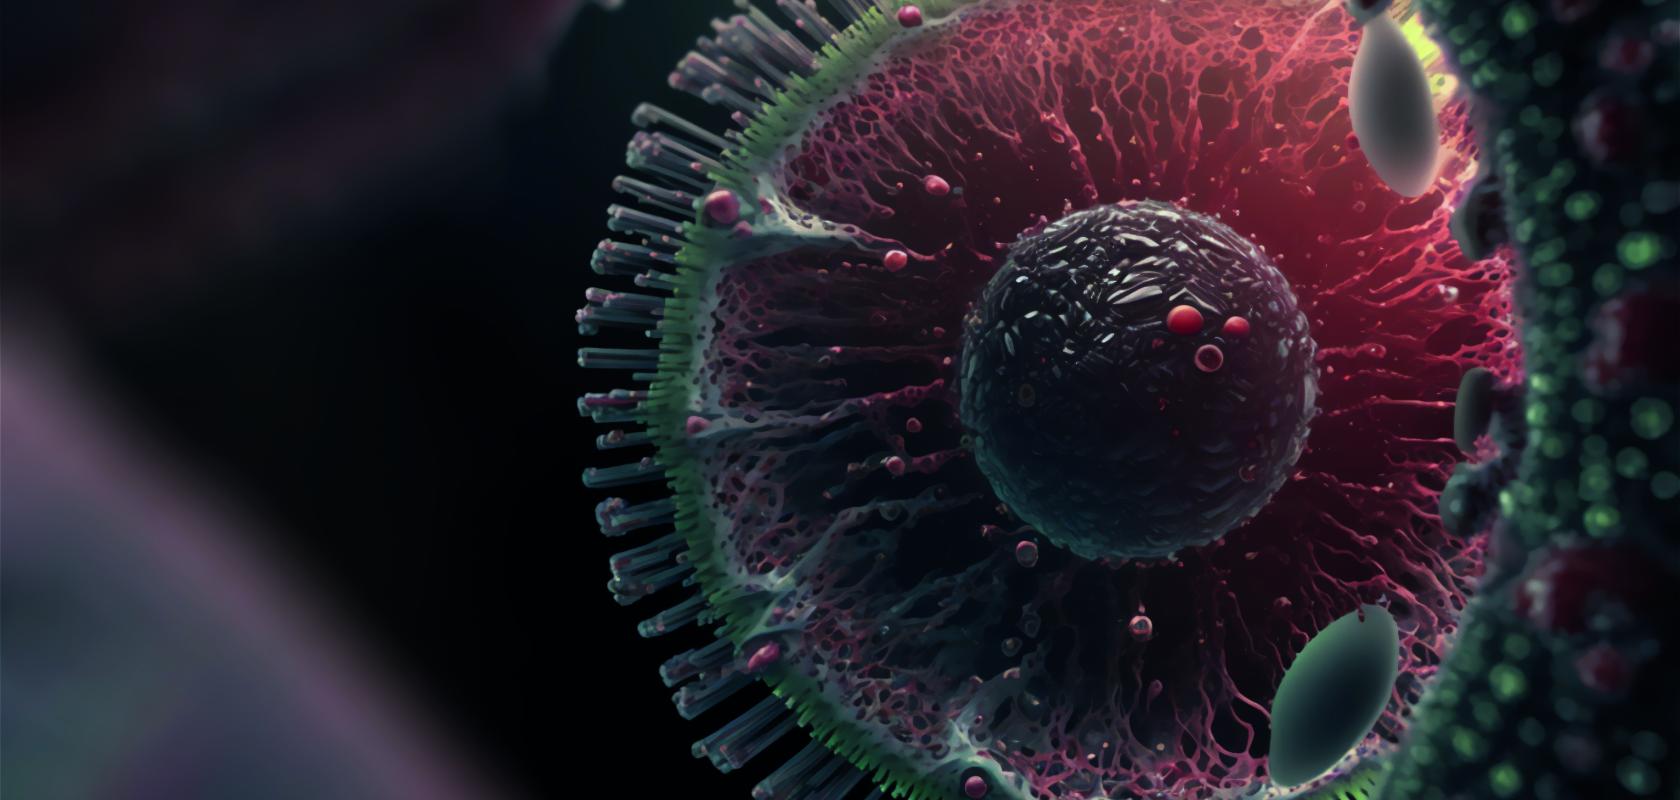 Covid -19 virus under microscope